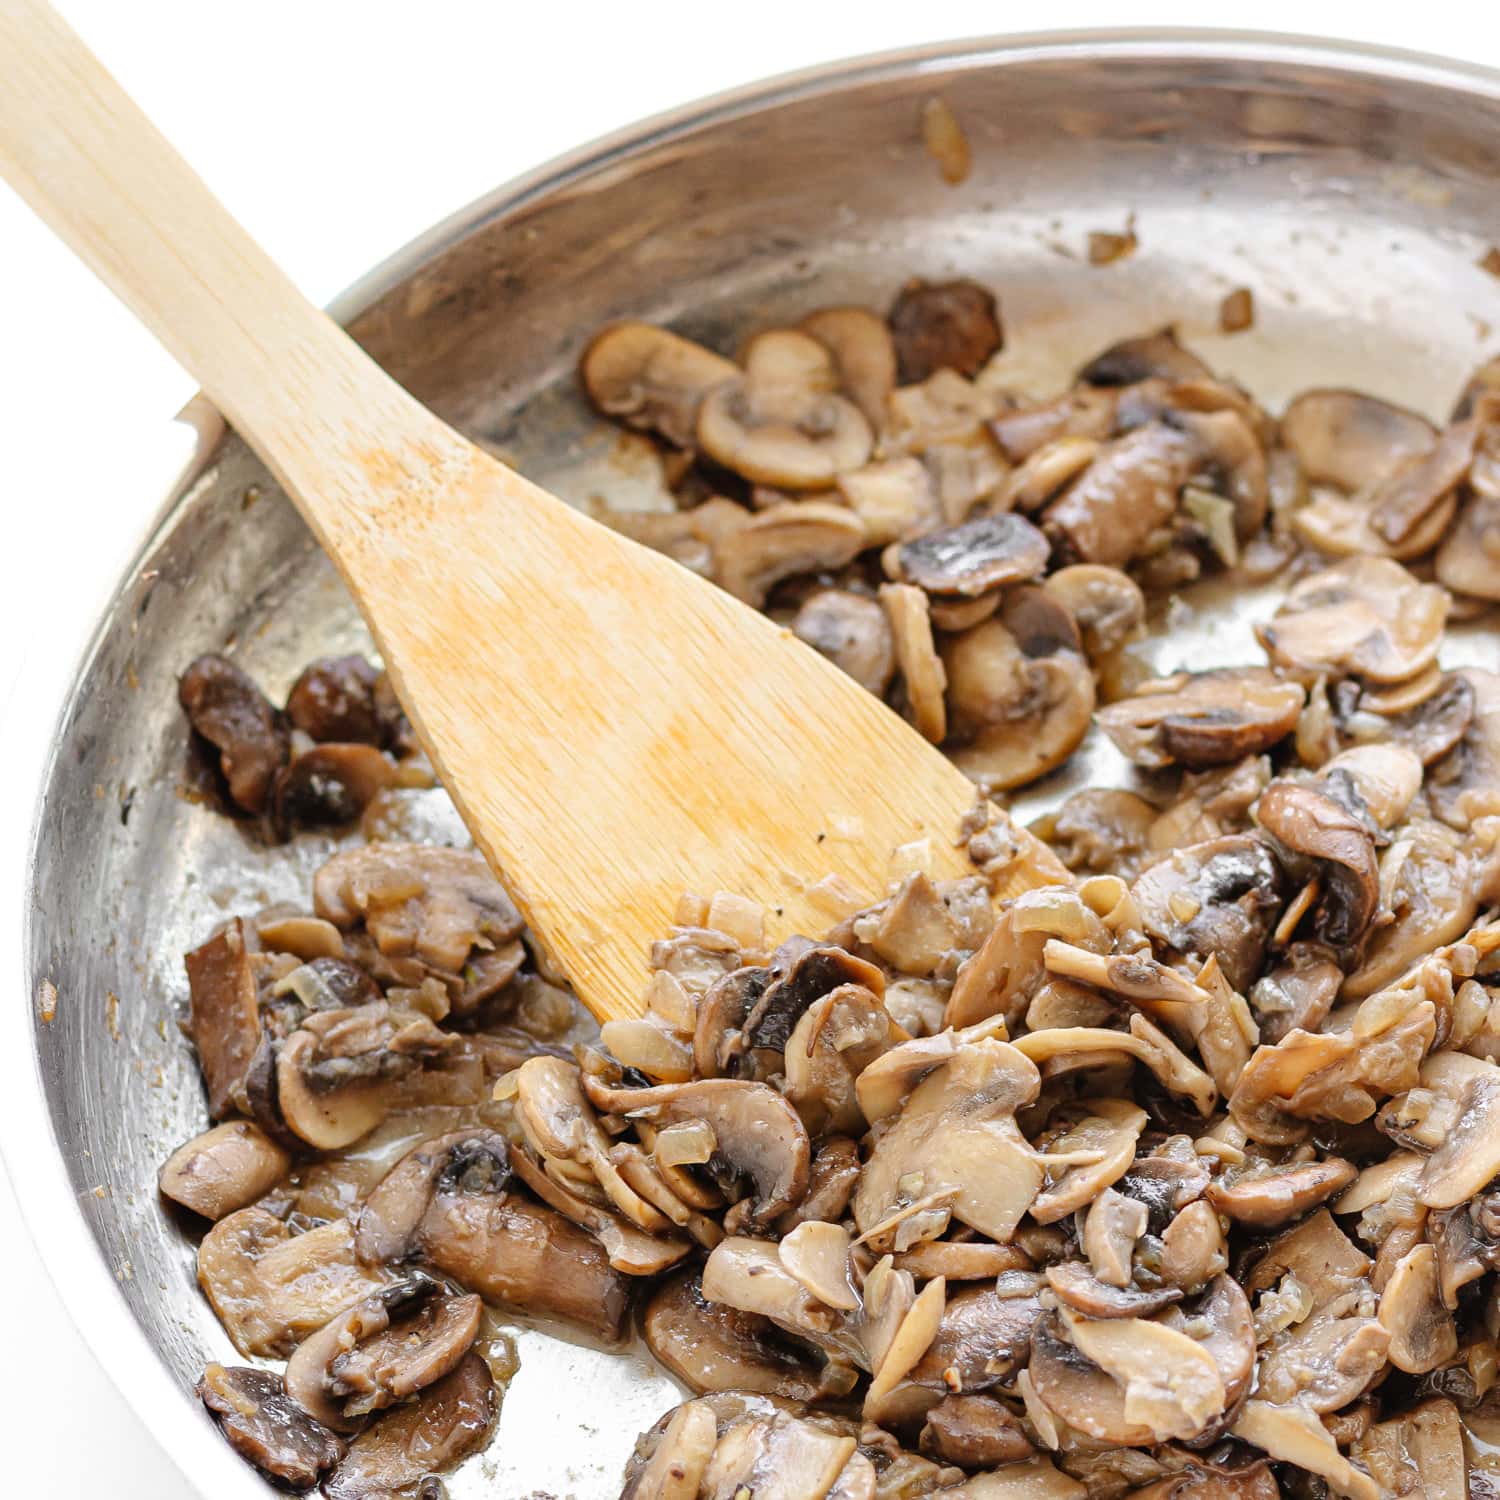 Deglazing pan of sautéed mushrooms, onions and garlic with some dry sherry.